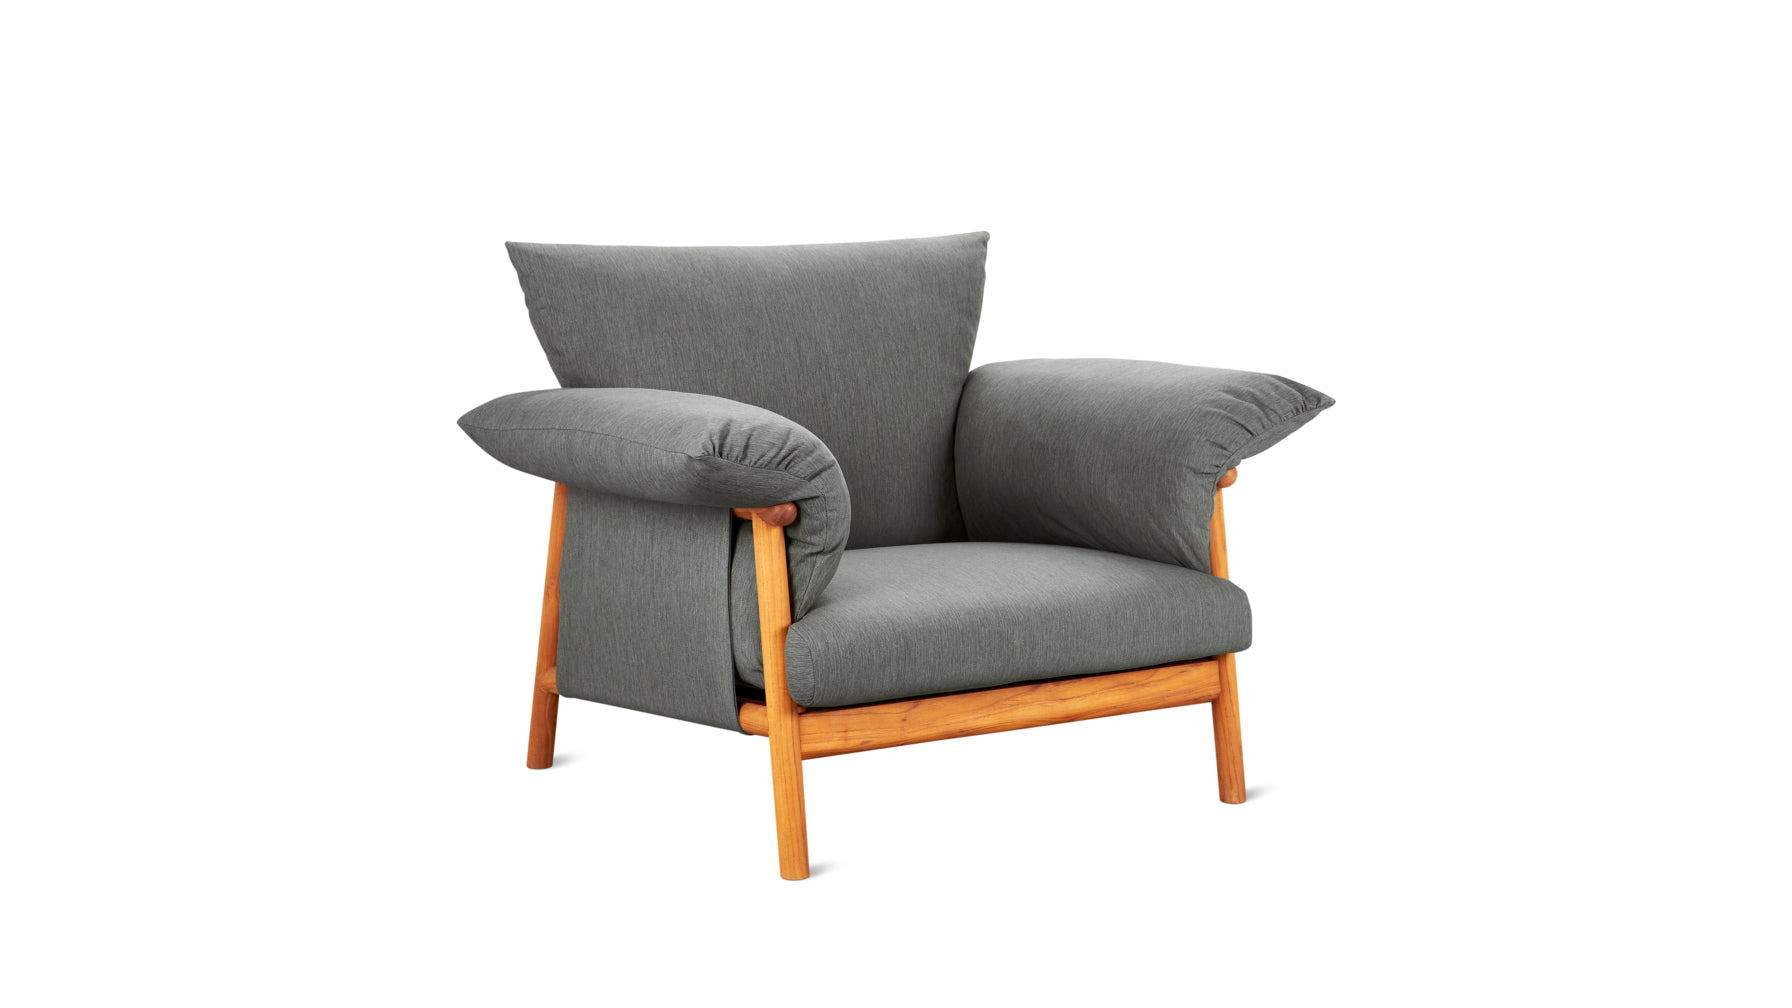 Pillow Talk Outdoor Lounge Chair, Pepper - Image 1